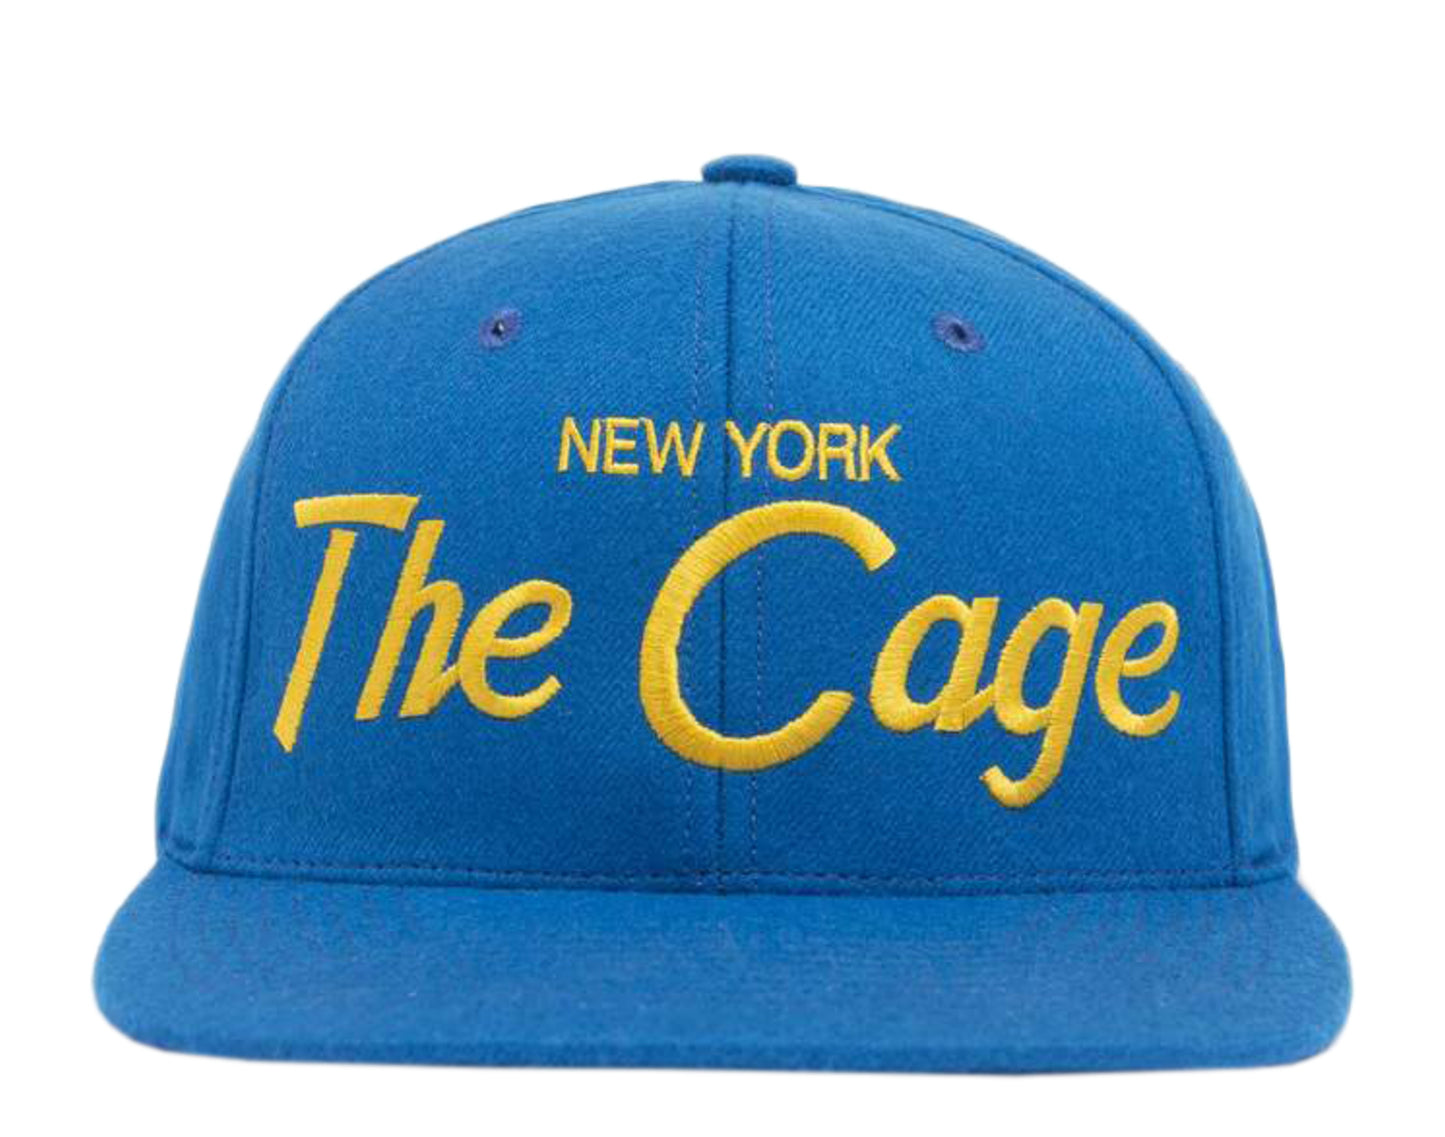 Hood Hat USA The Cage New York NY Wool Snapback